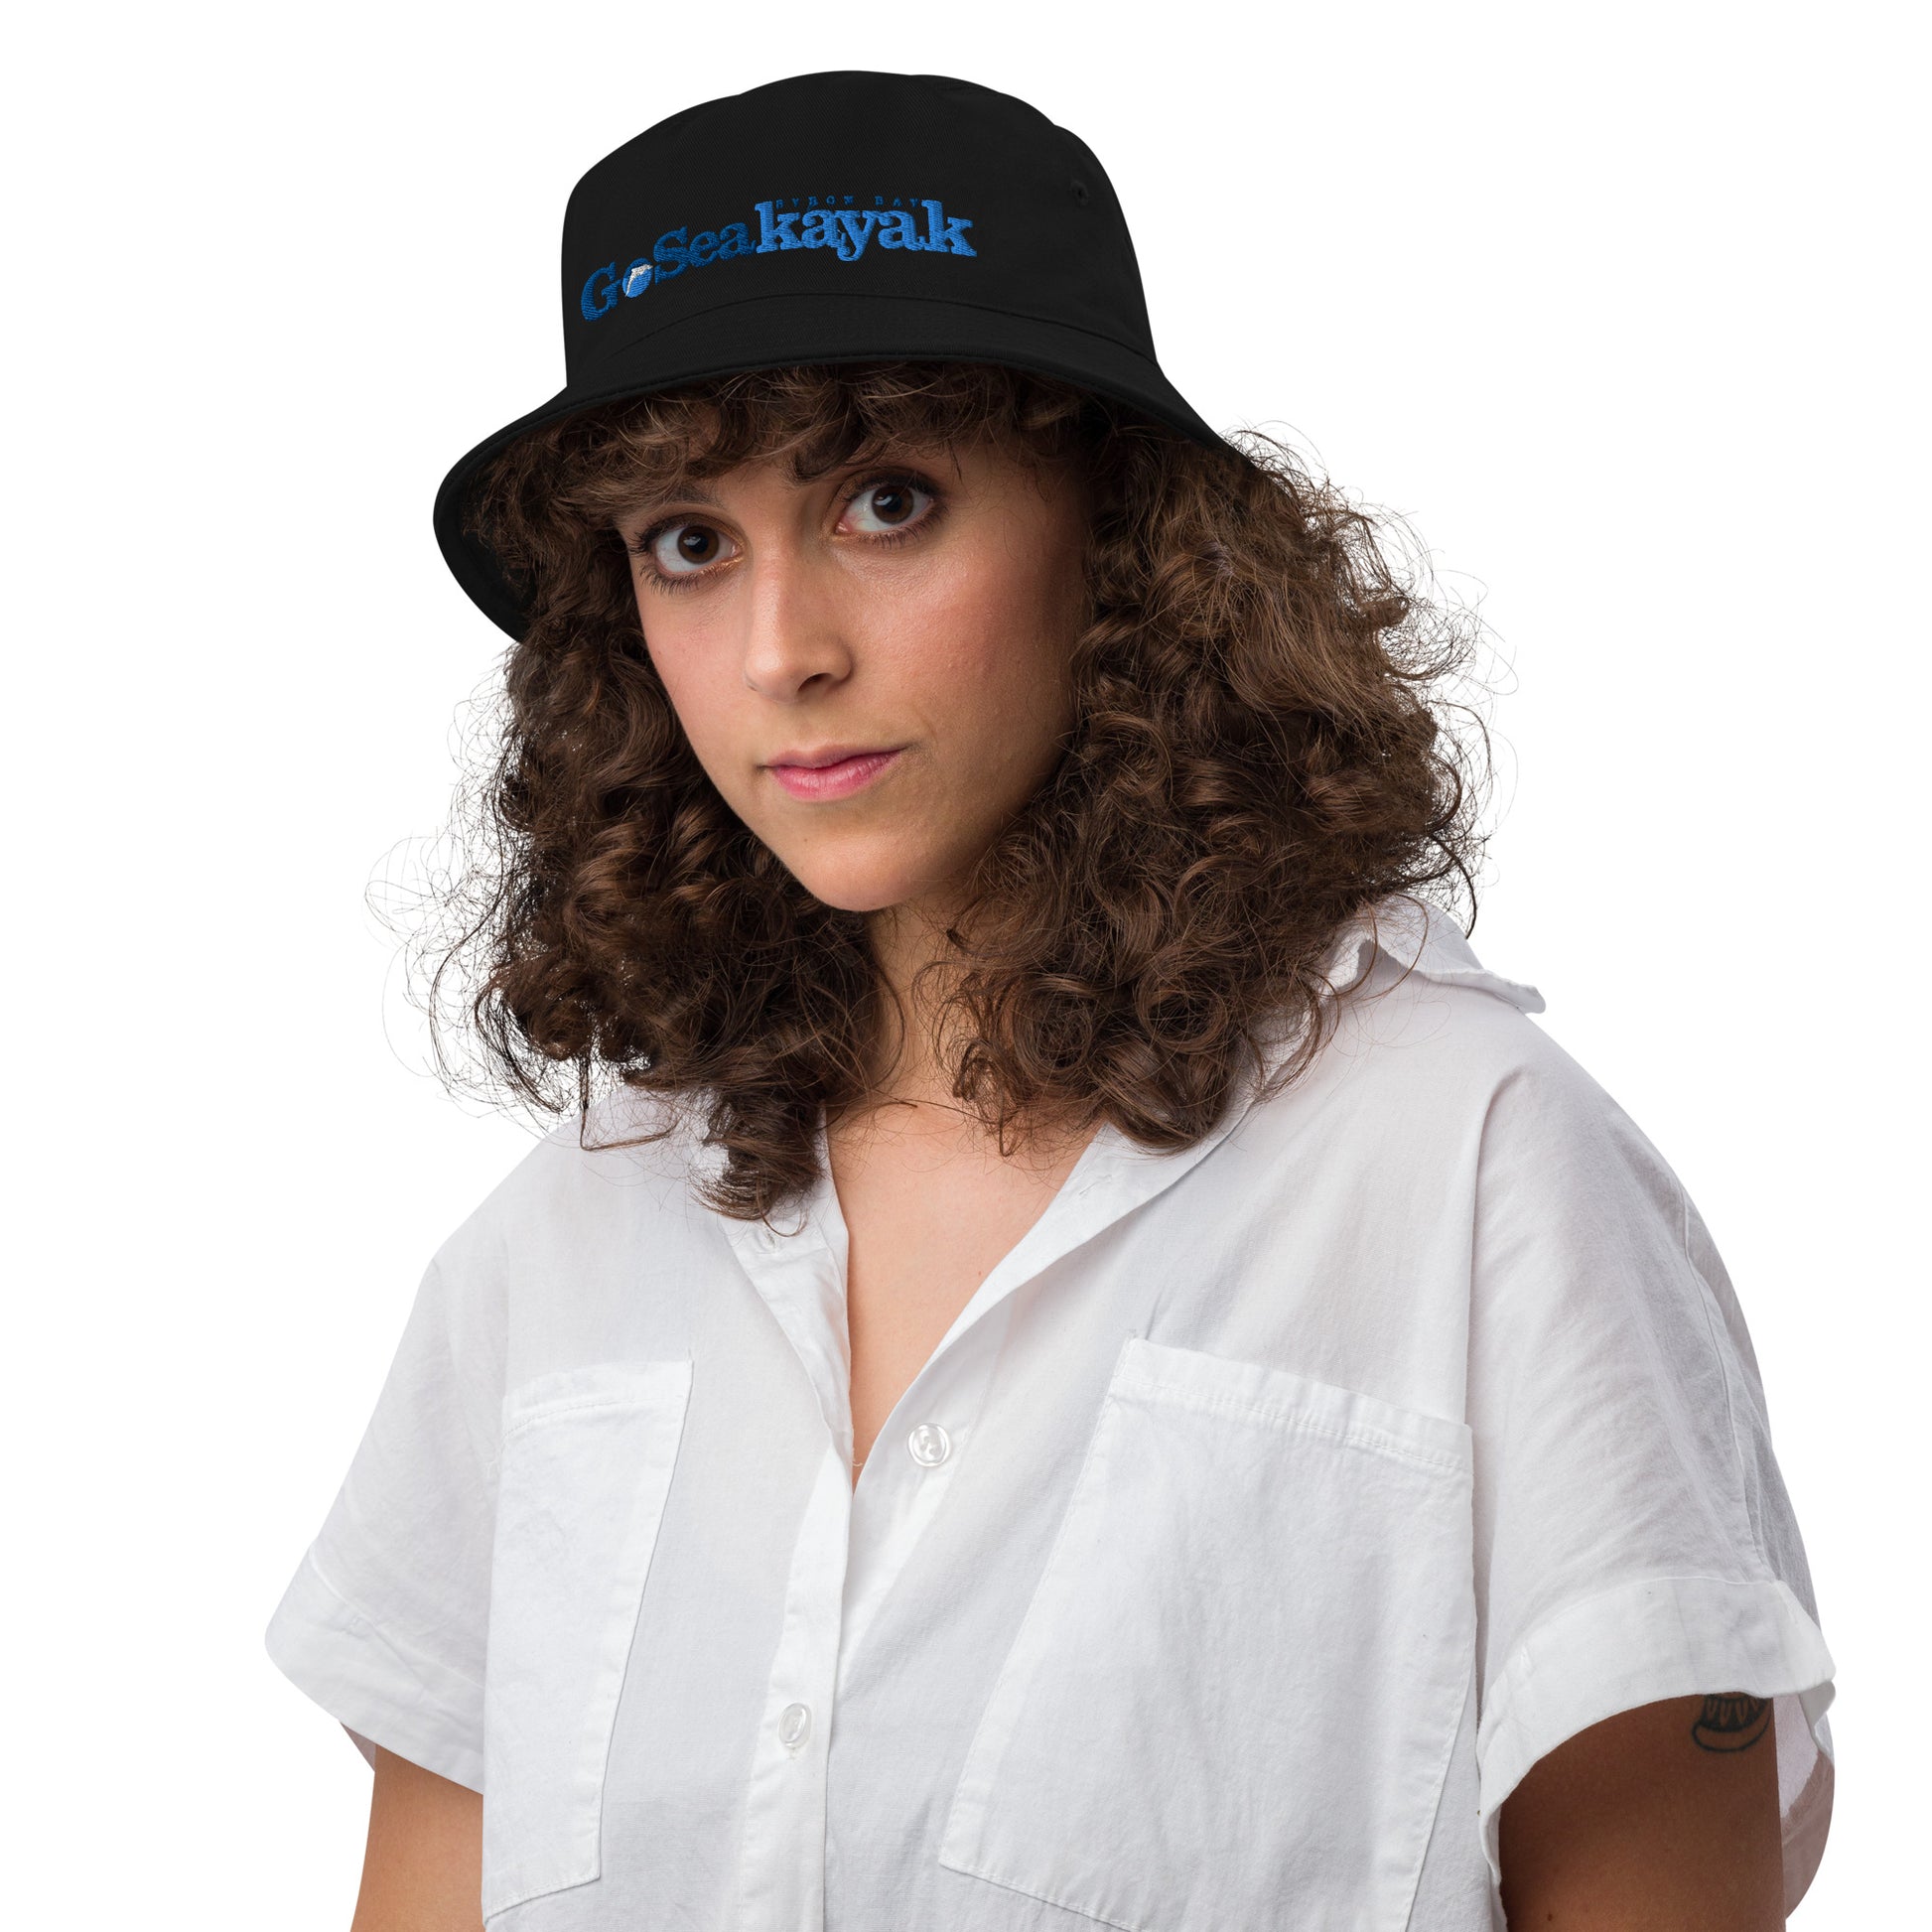  Unisex Bucket Hat - Black - Front view on woman's head - Go Sea Kayak Byron Bay logo on front  - Genuine Byron Bay Merchandise | Produced by Go Sea Kayak Byron Bay